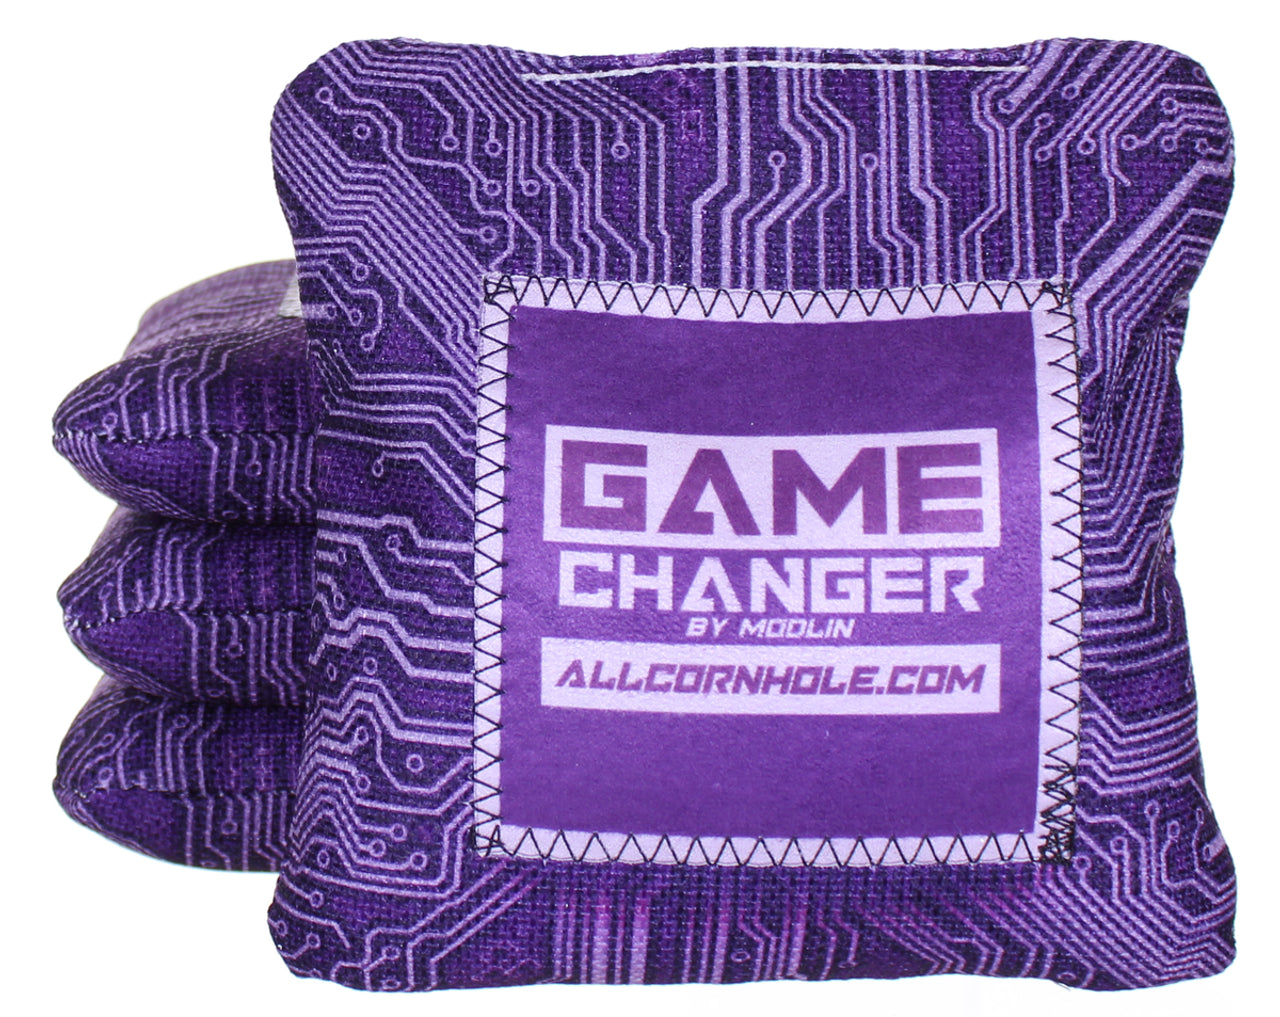 Game Changer Cornhole Bags - Circuit Board (Set of 4)